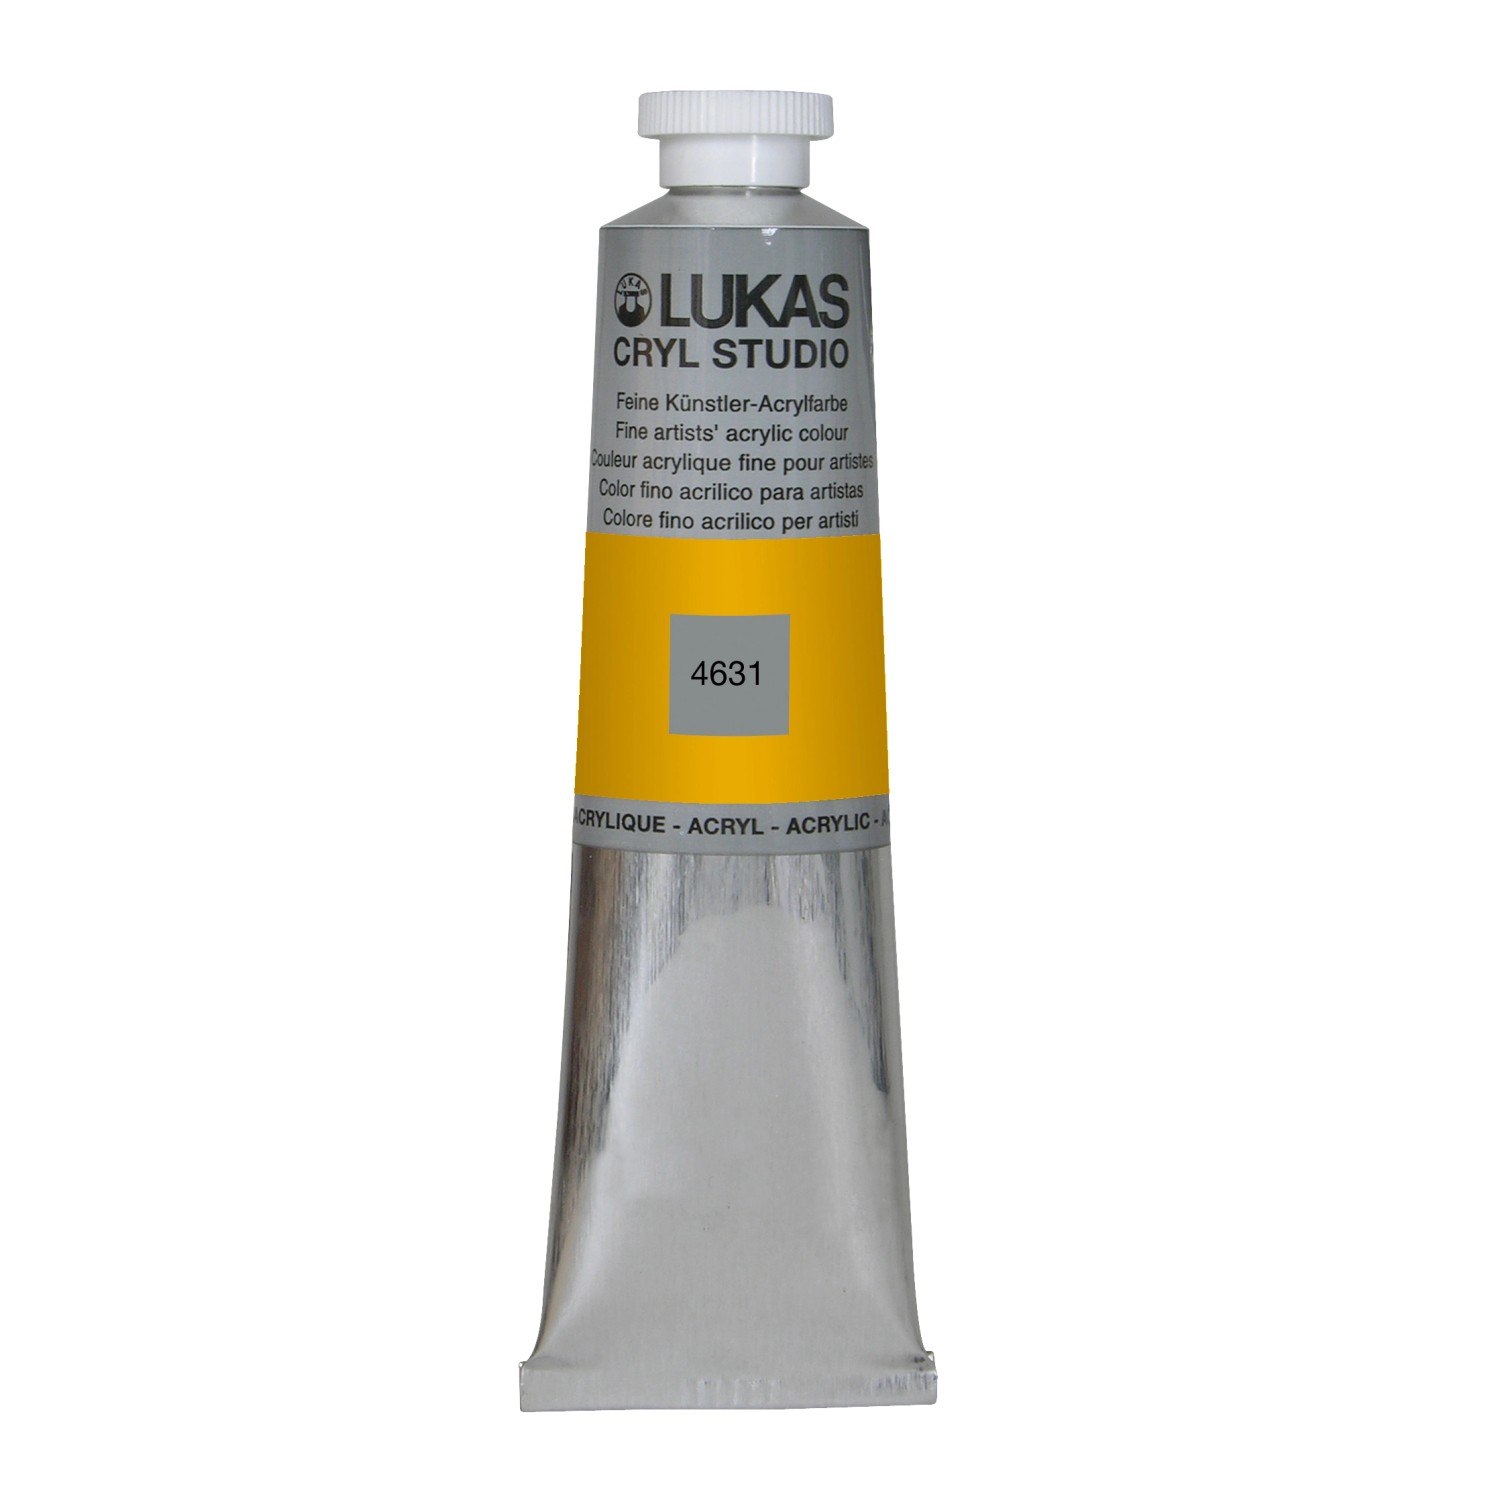 Lukas Cryl Studio Acrylfarbe Aluminiumtube Lichter Ocker 75ml von -